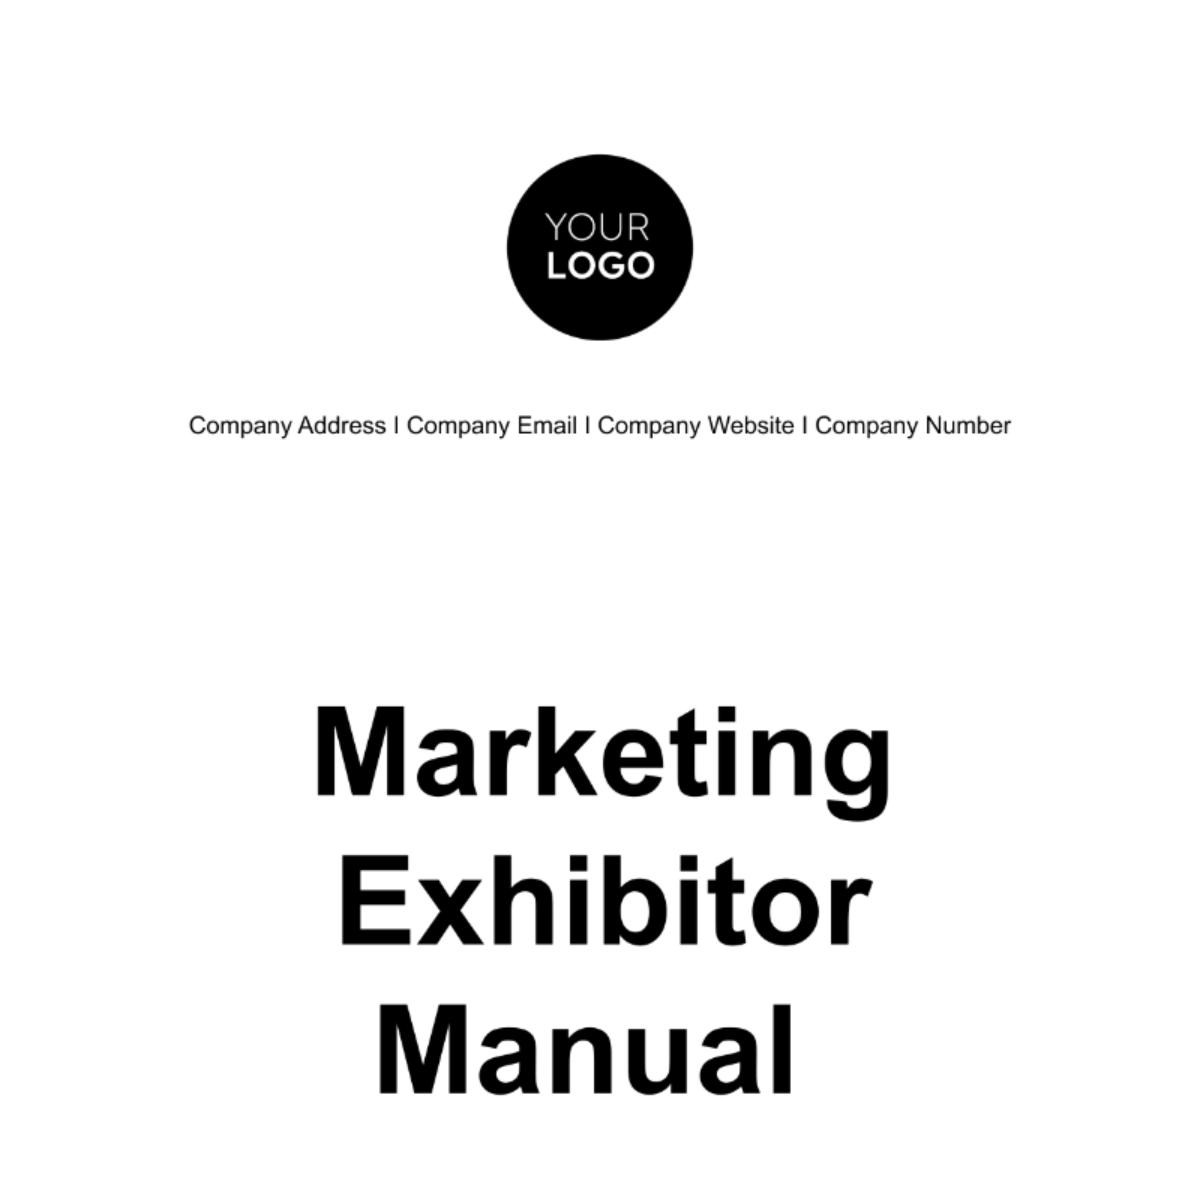 Marketing Exhibitor Manual Template